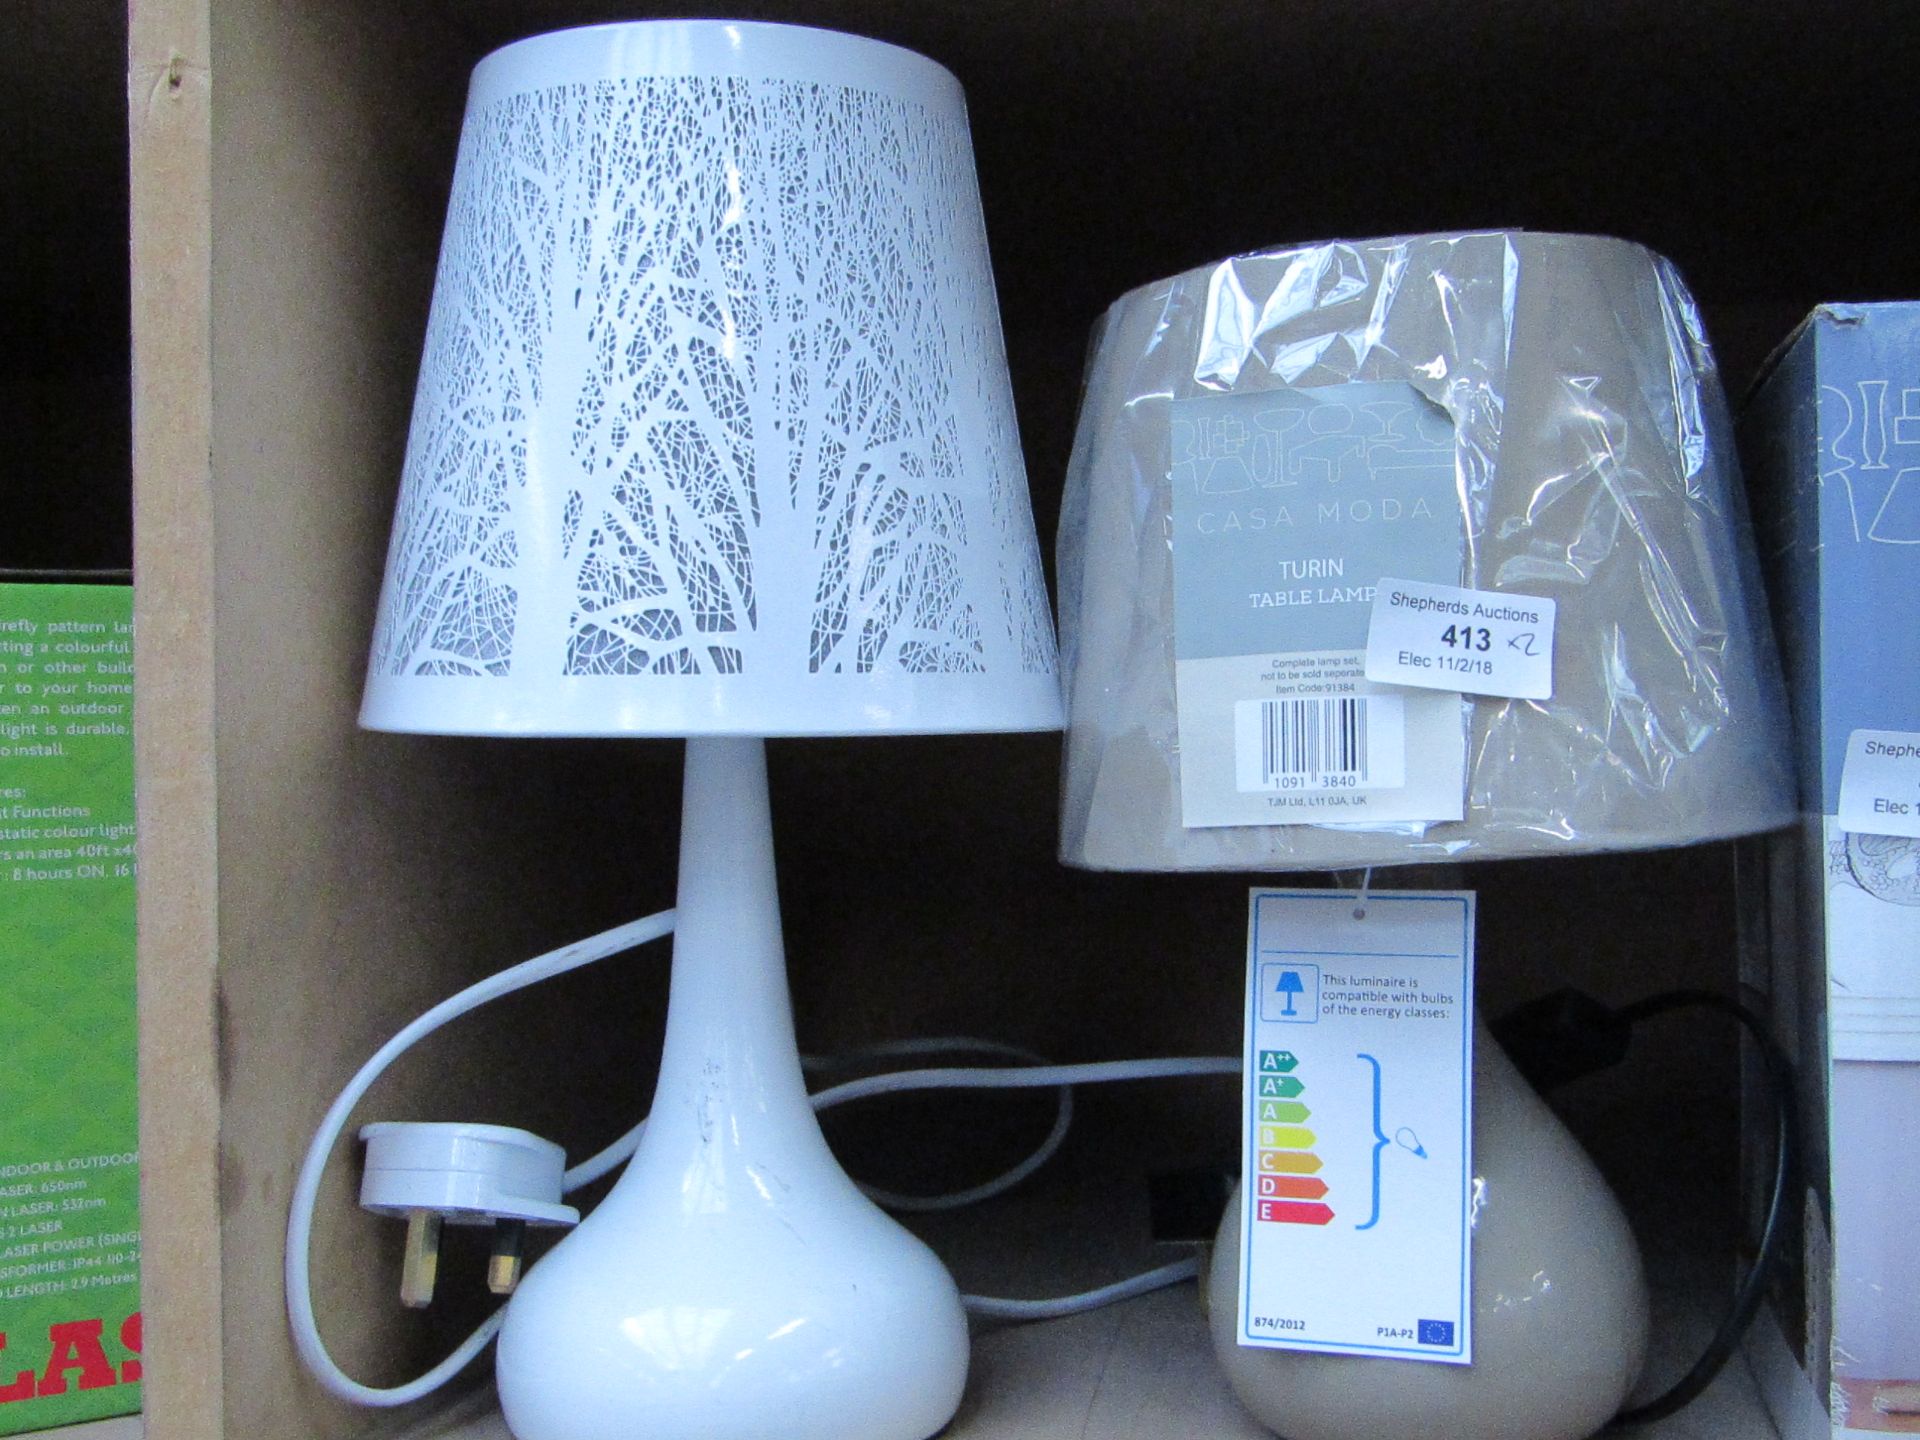 2x Casa Moda table lamps. Both untested & boxed.